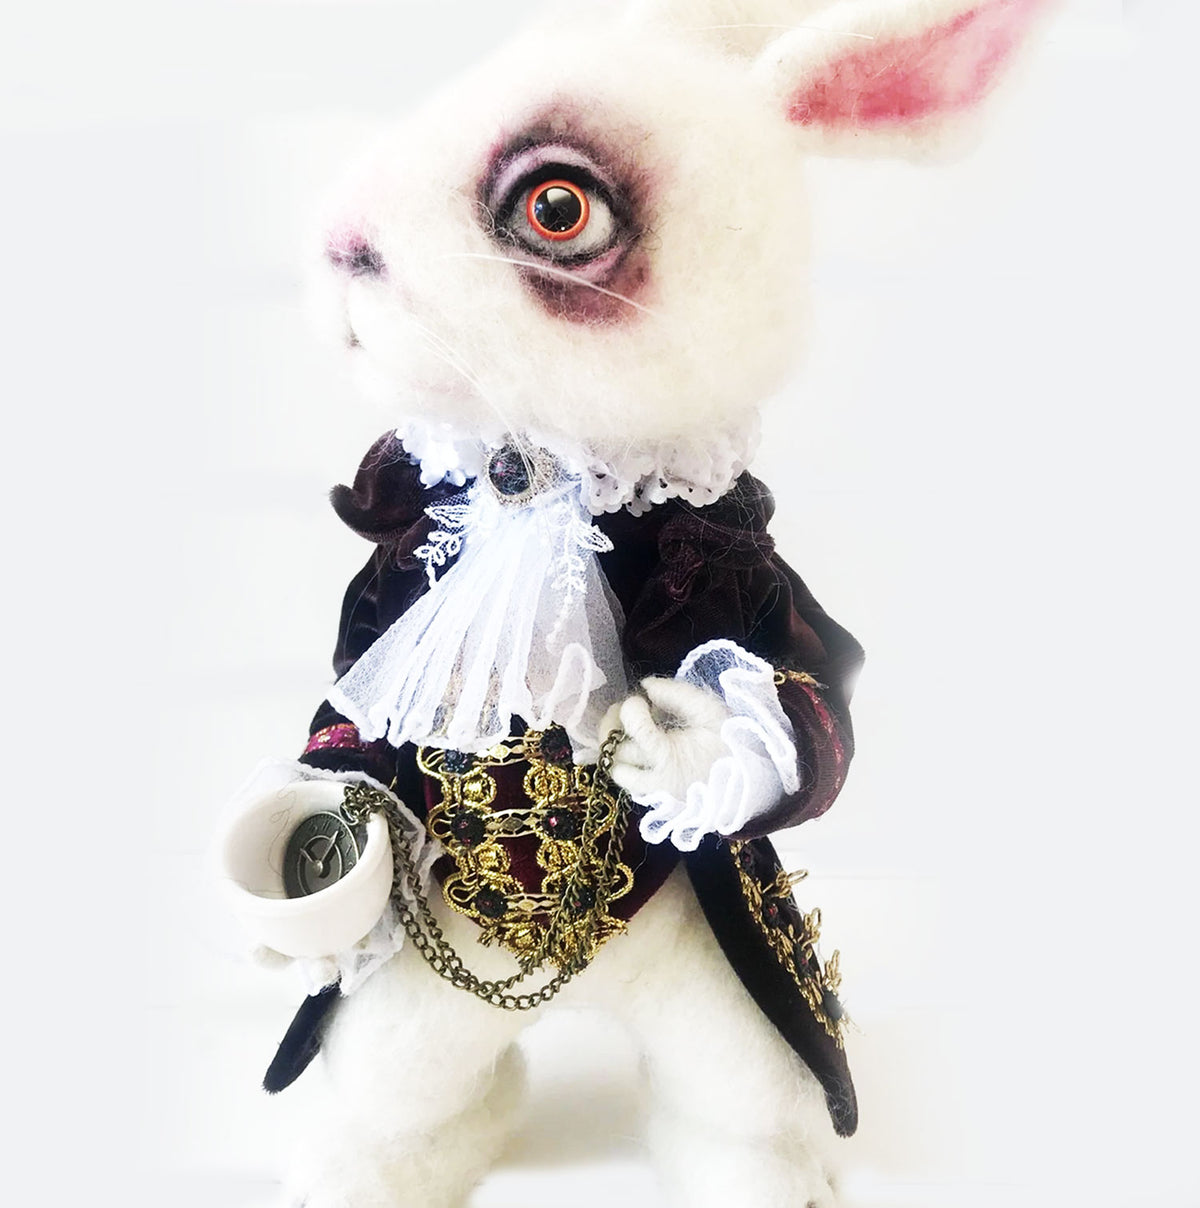 Felt Fairytale Creature Statue - The White Rabbit